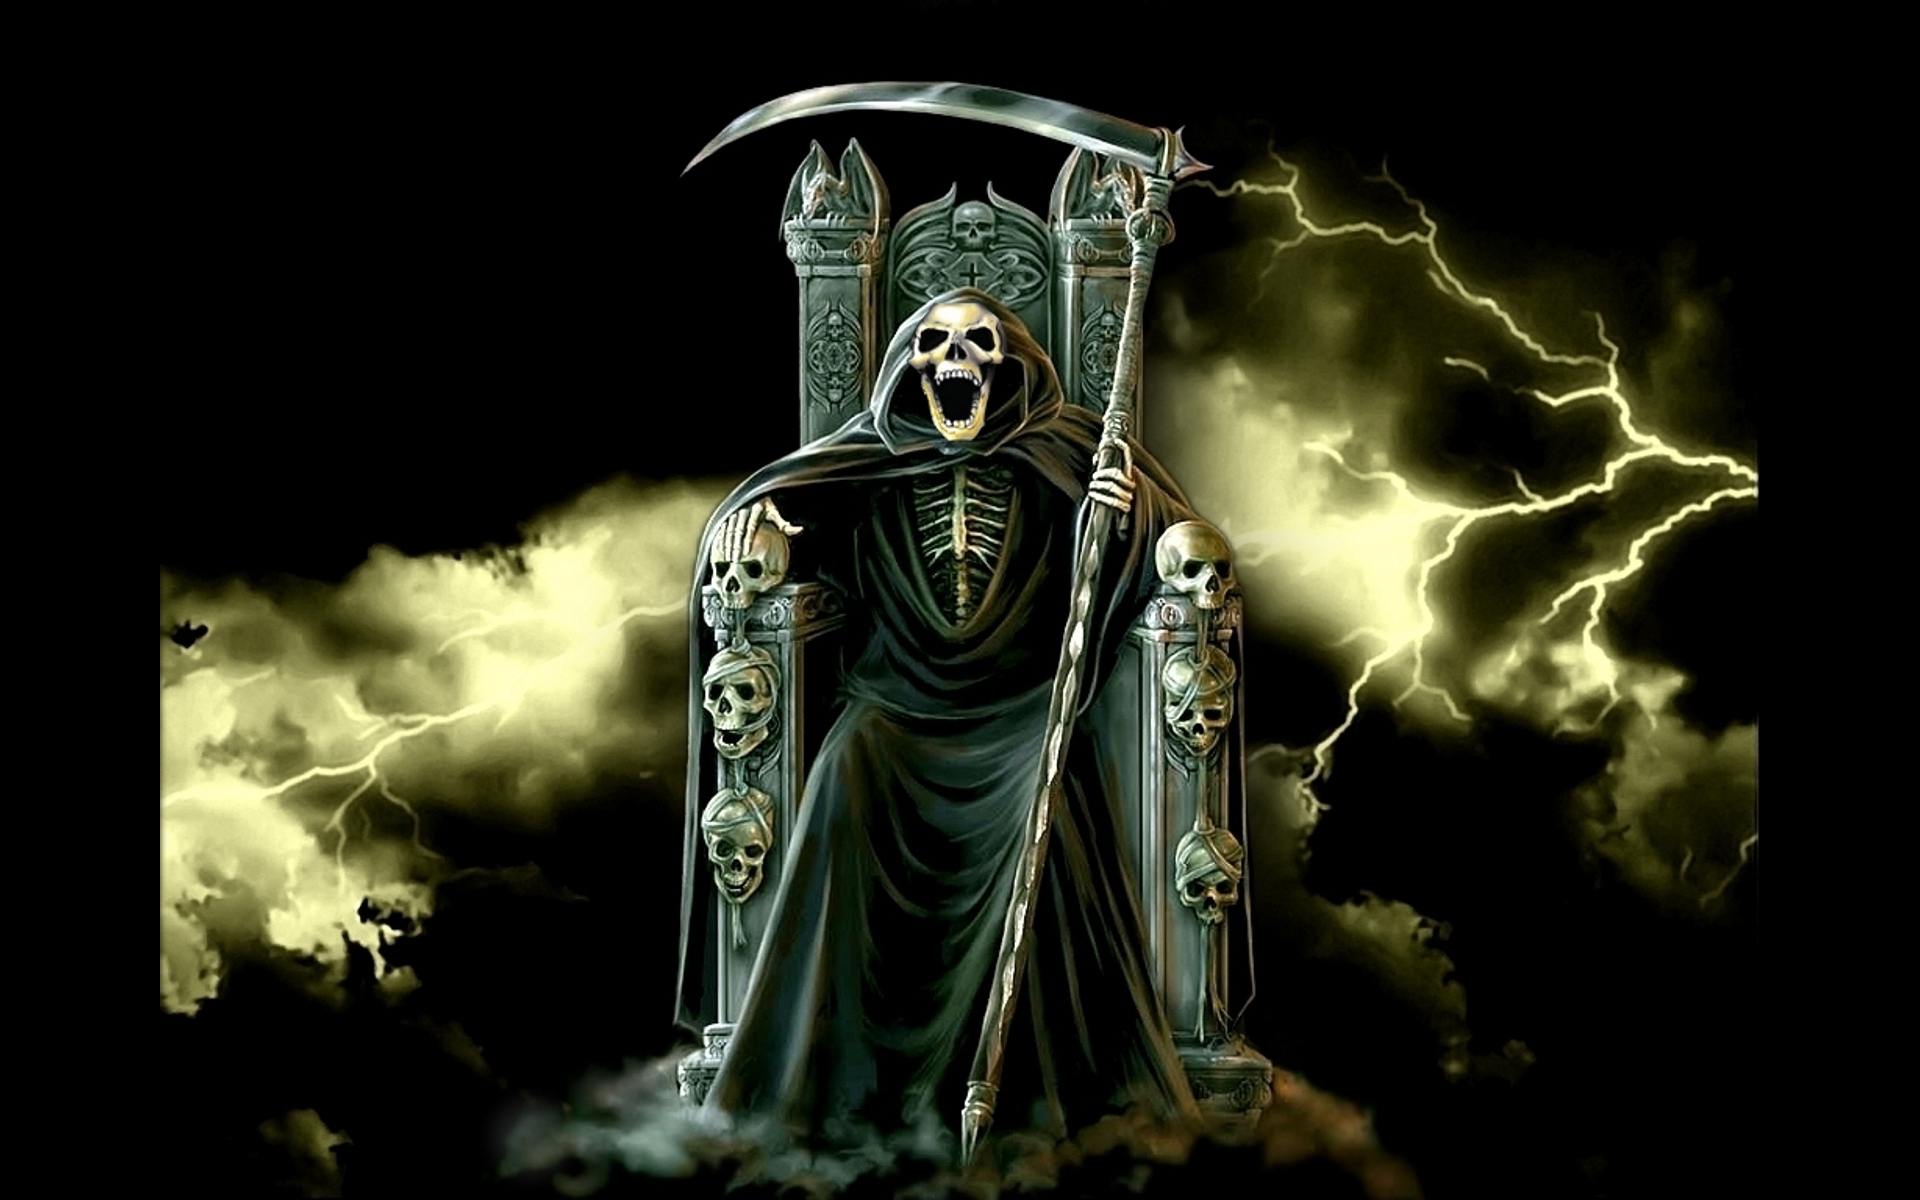 The Exorcist Grim Reaper - The Exorcist Wallpaper (34302961) - Fanpop